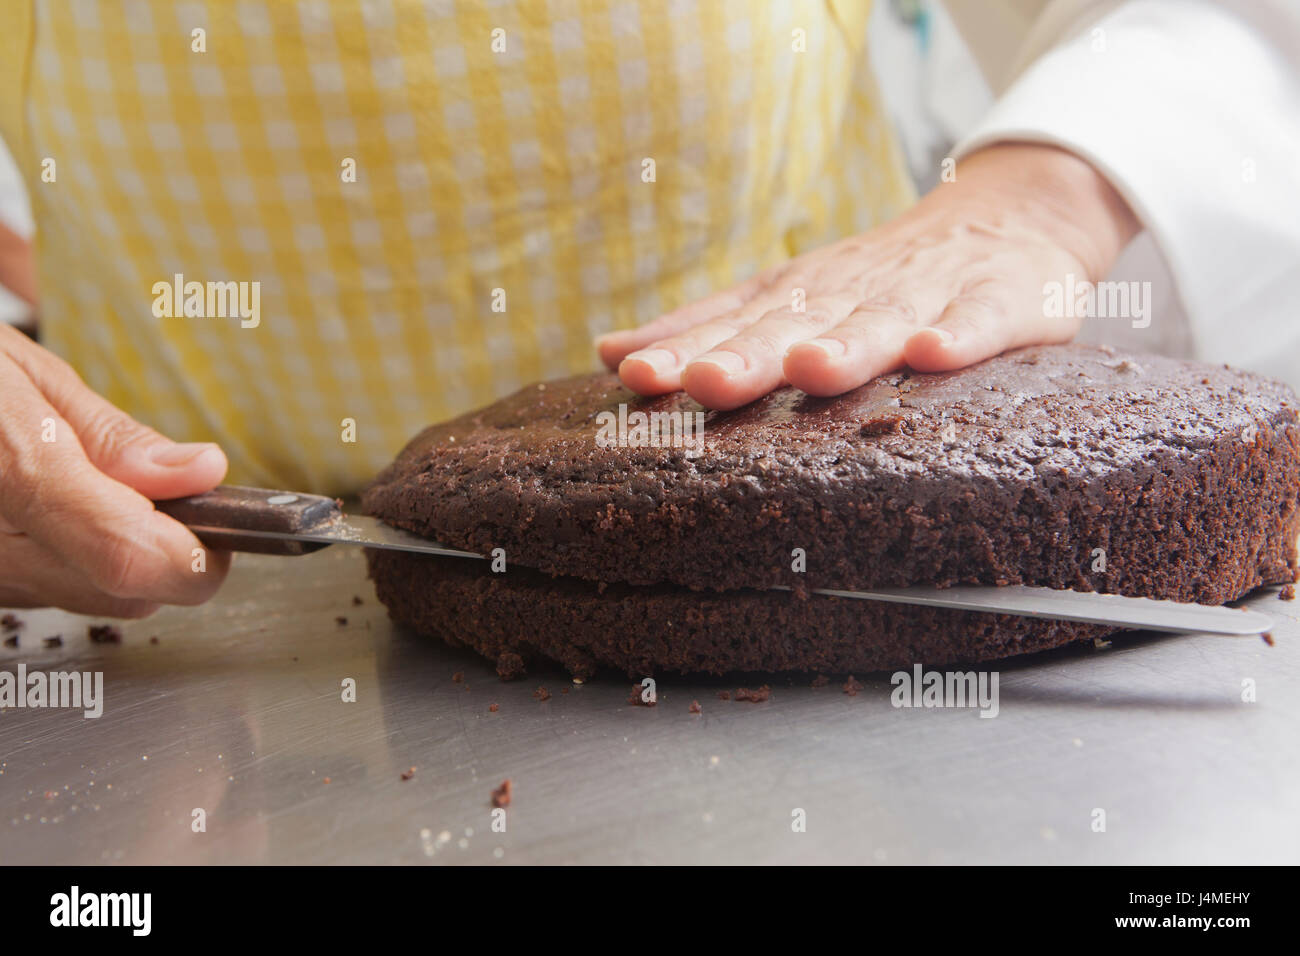 Hispanic woman cutting cake with knife Stock Photo